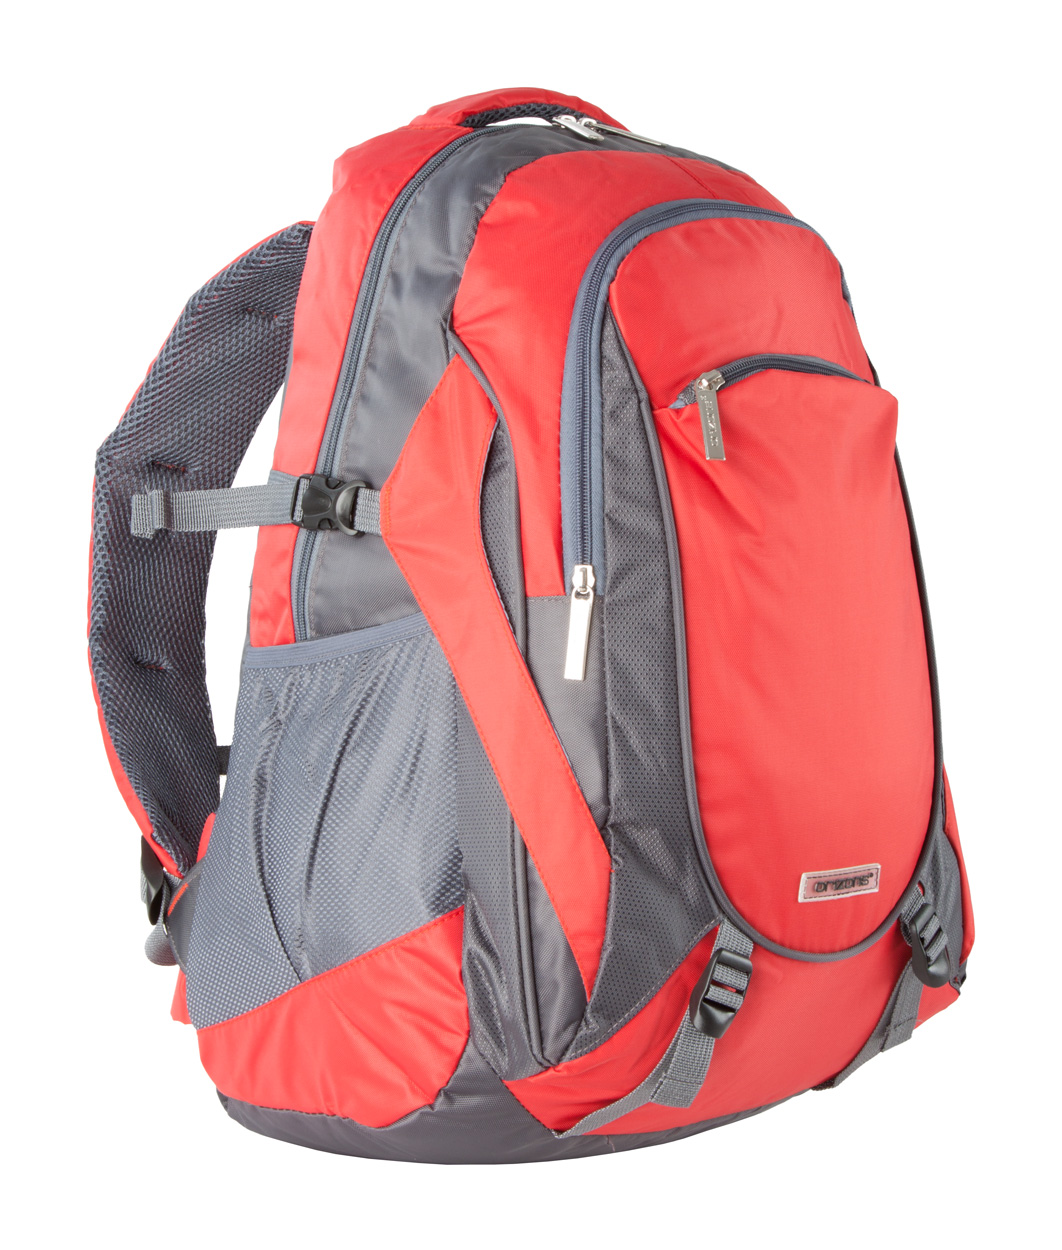 Virtux backpack